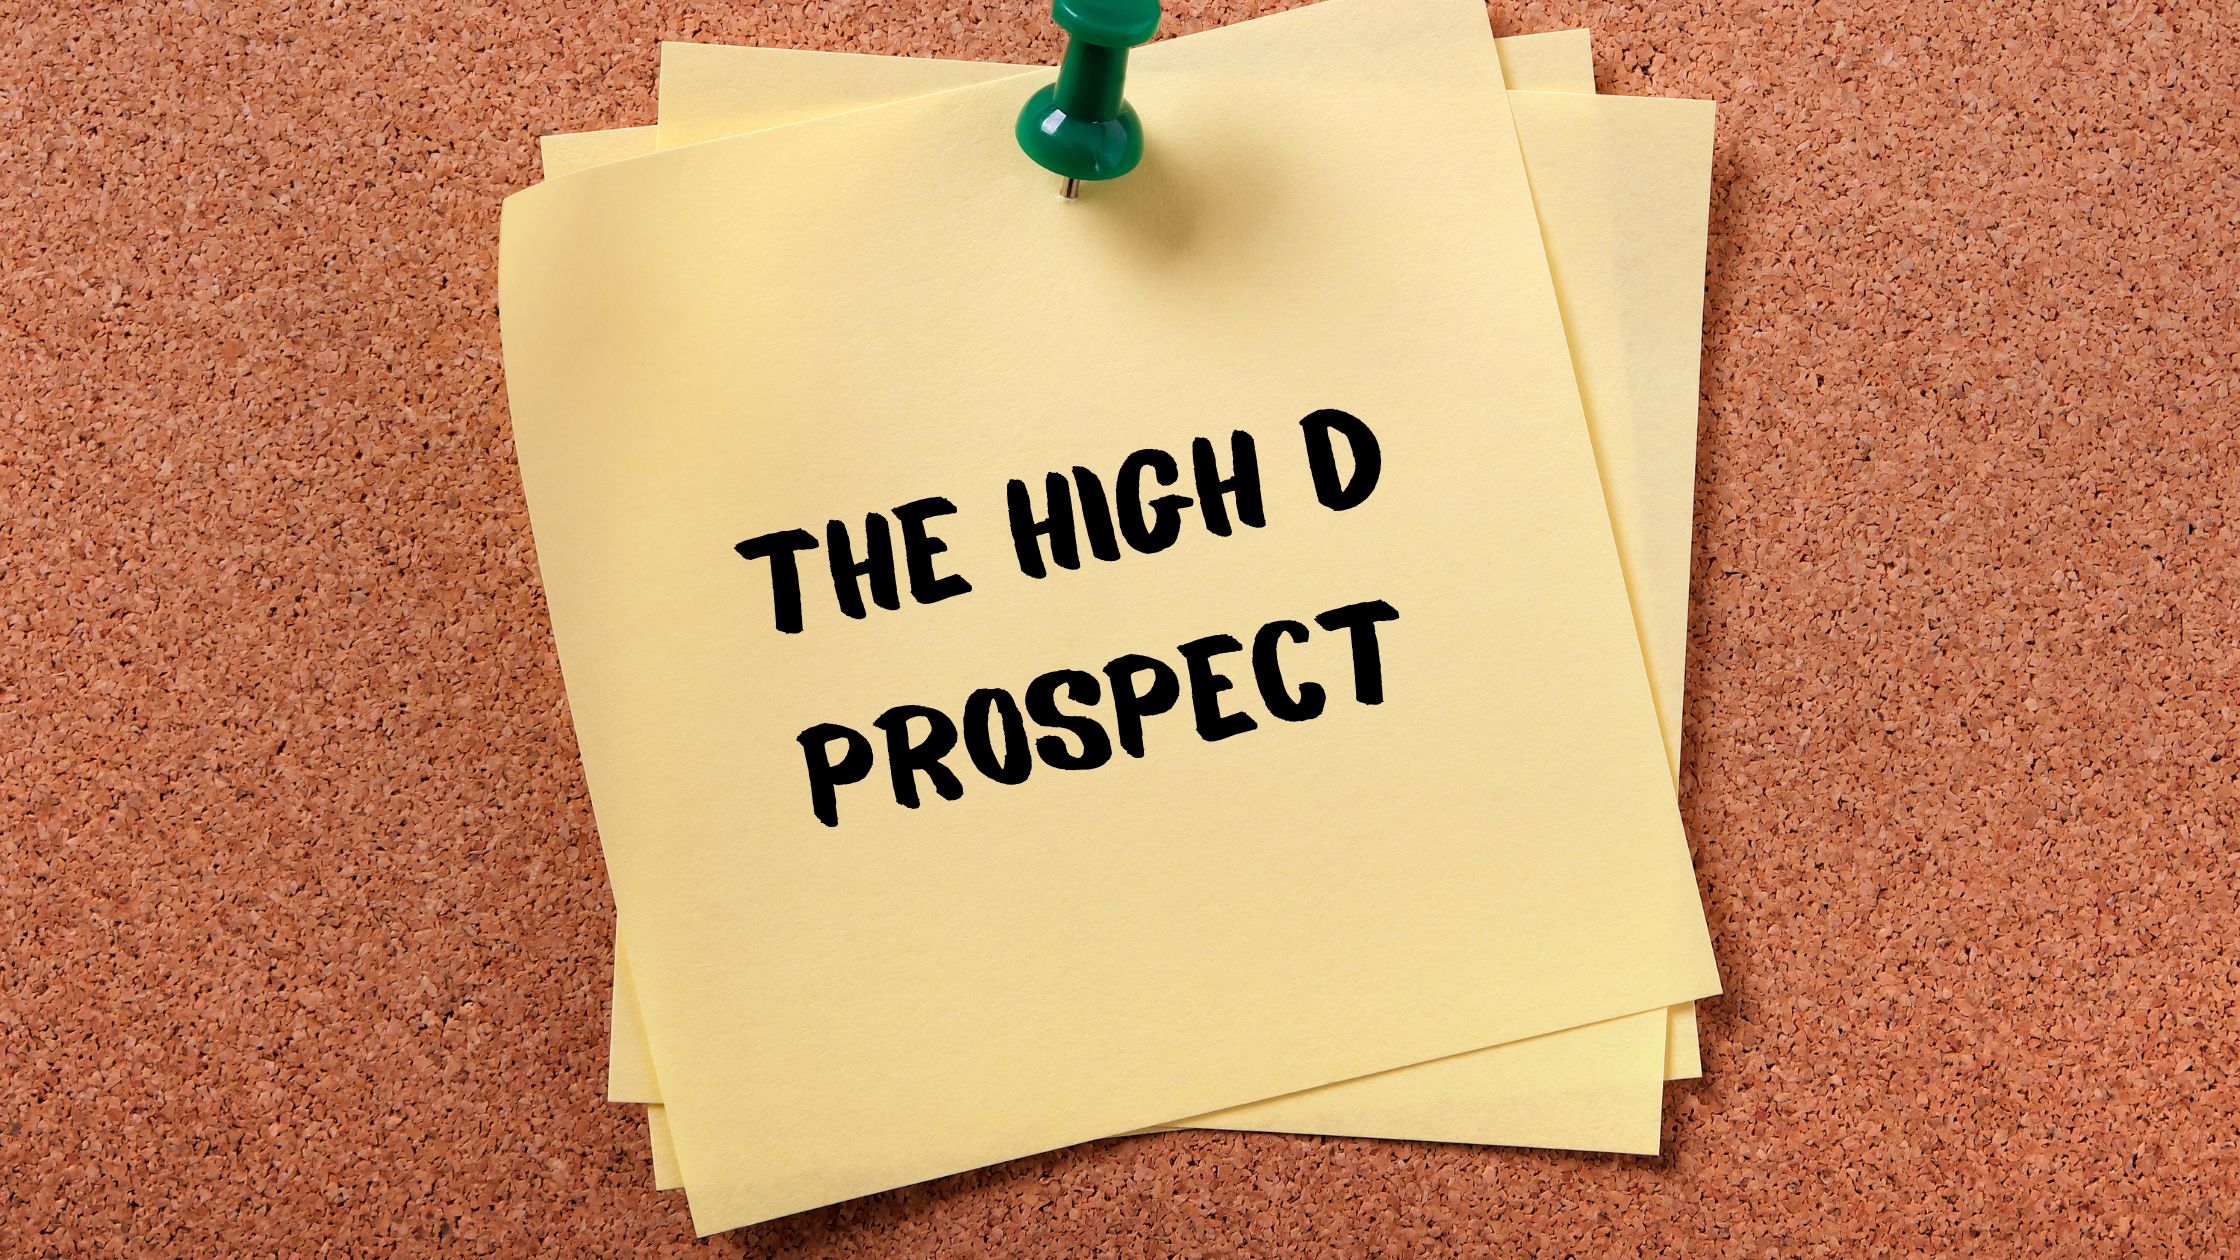 The High D Prospect